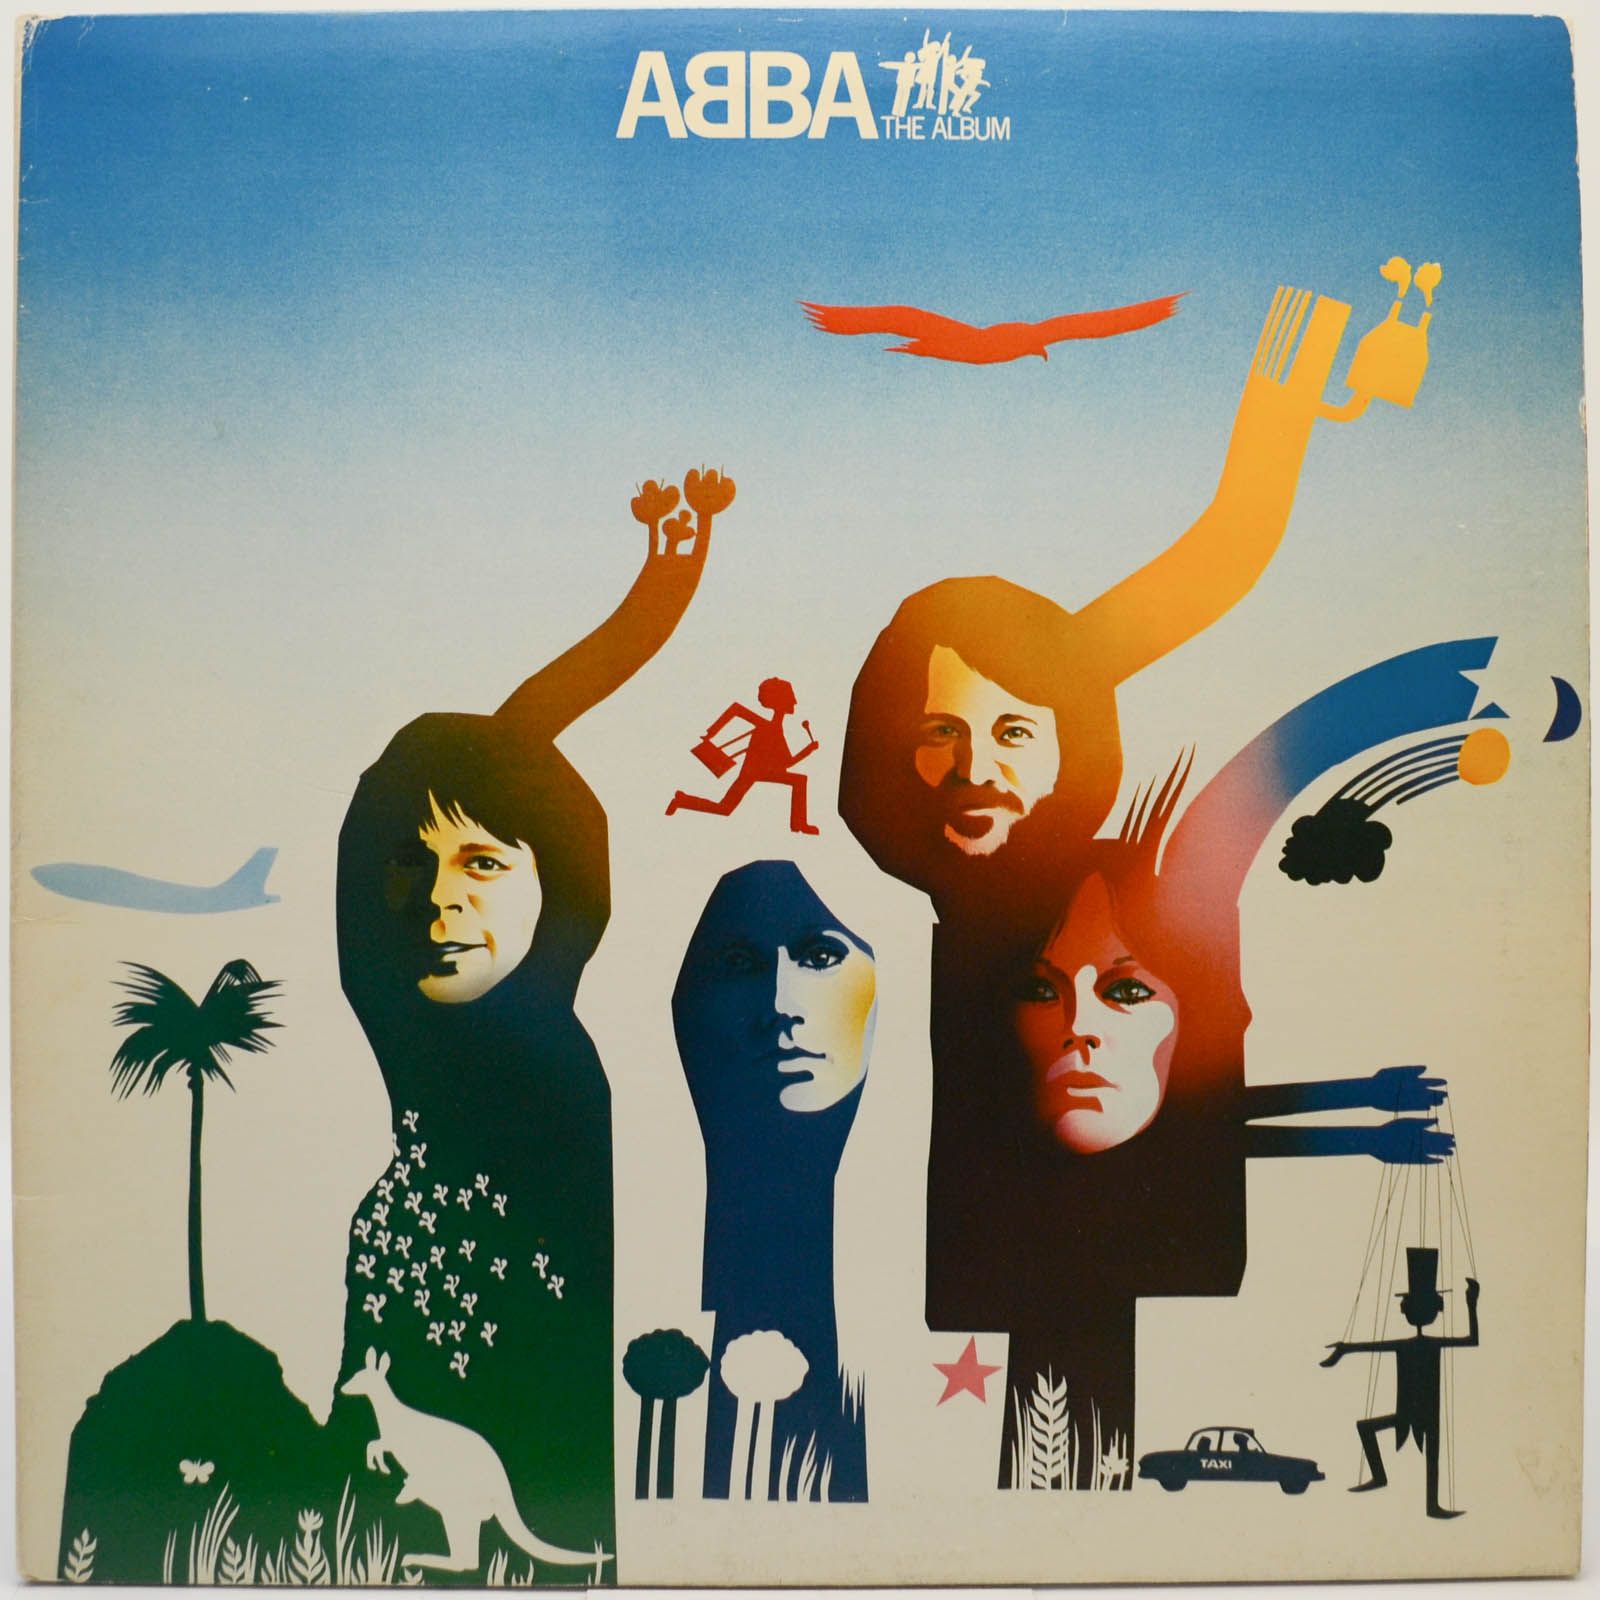 ABBA — The Album (UK), 1977